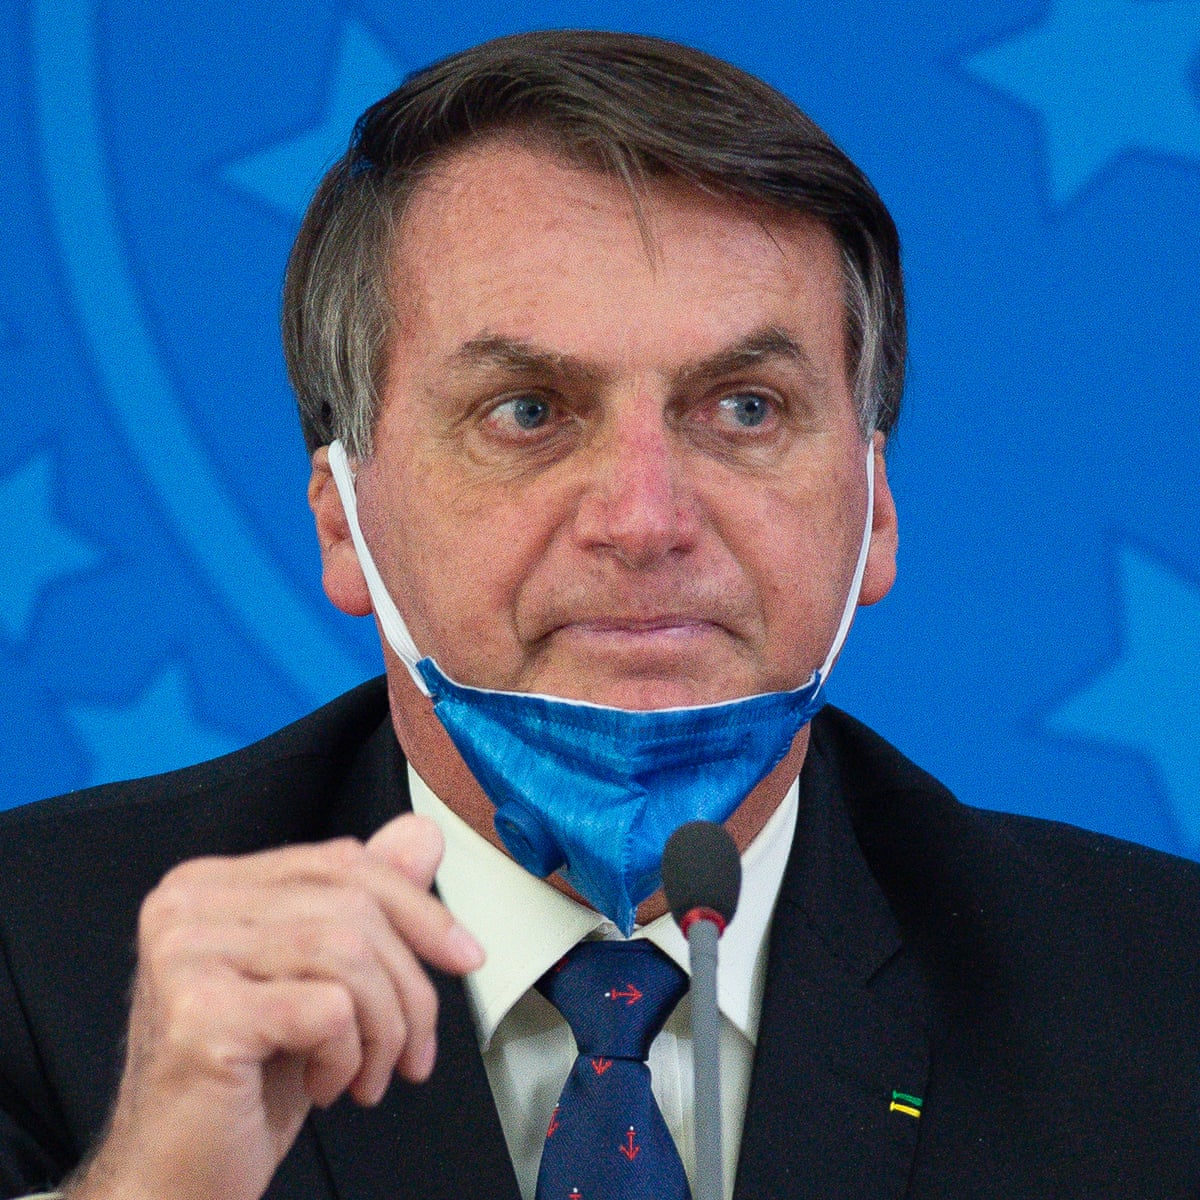 Brazil S Jair Bolsonaro Says Coronavirus Crisis Is A Media Trick World News The Guardian